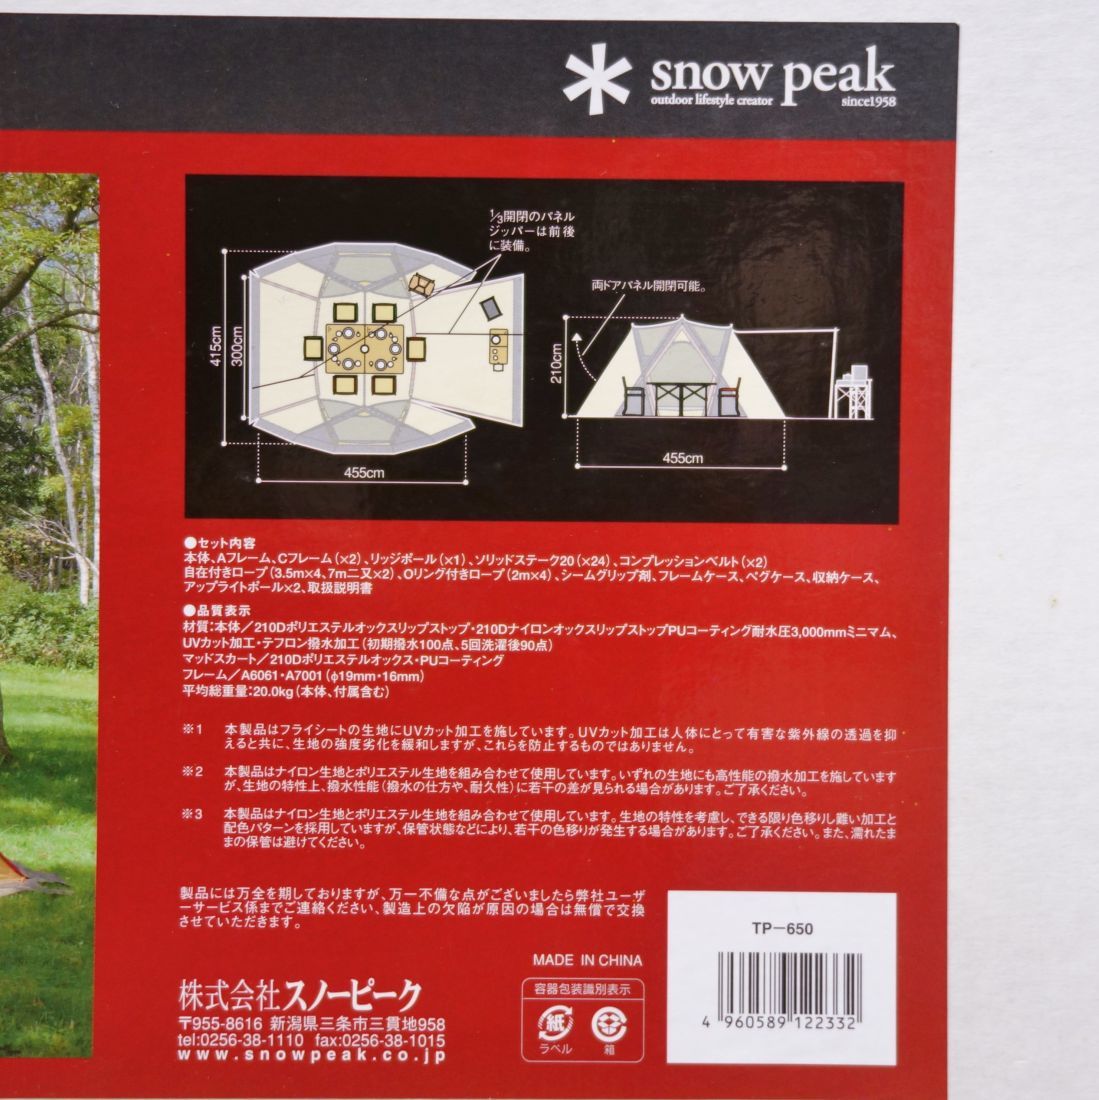  не использовался редкий Snow Peak snowpeak 200. ограниченный товар 50 anniversary commemoration living ракушка защита pro TP-650 ракушка ta- палатка cg02dt-rk26y02326